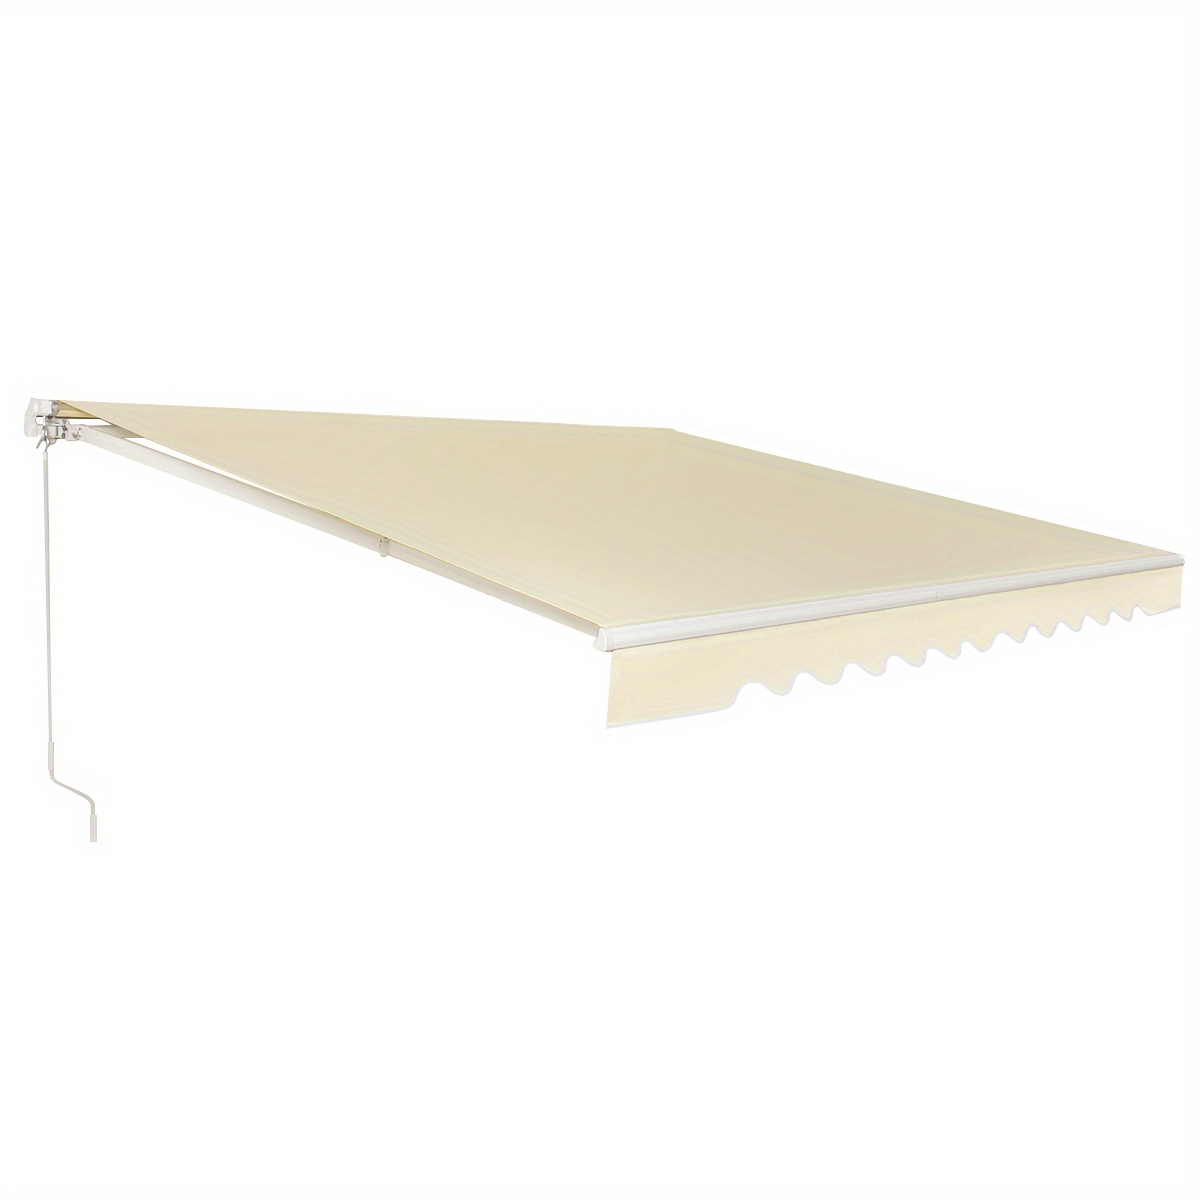 

Multigot 12'×10' Retractable Patio Awning Aluminum Deck Sunshade Shelter Outdoor Beige